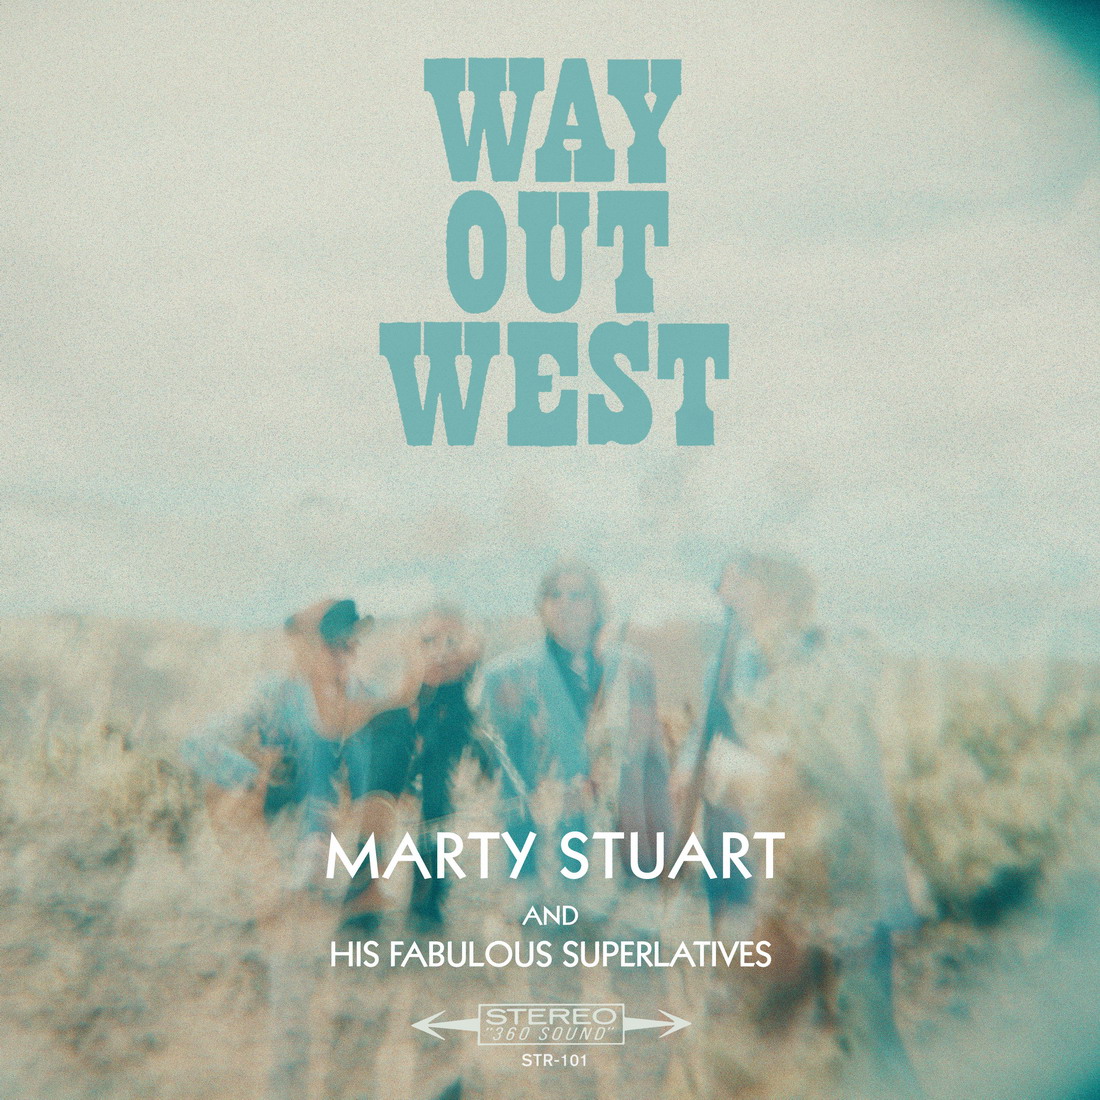 Marty Stuart and His Fabulous Superlatives - Way Out West (2017) [HDTracks FLAC 24bit/96kHz]